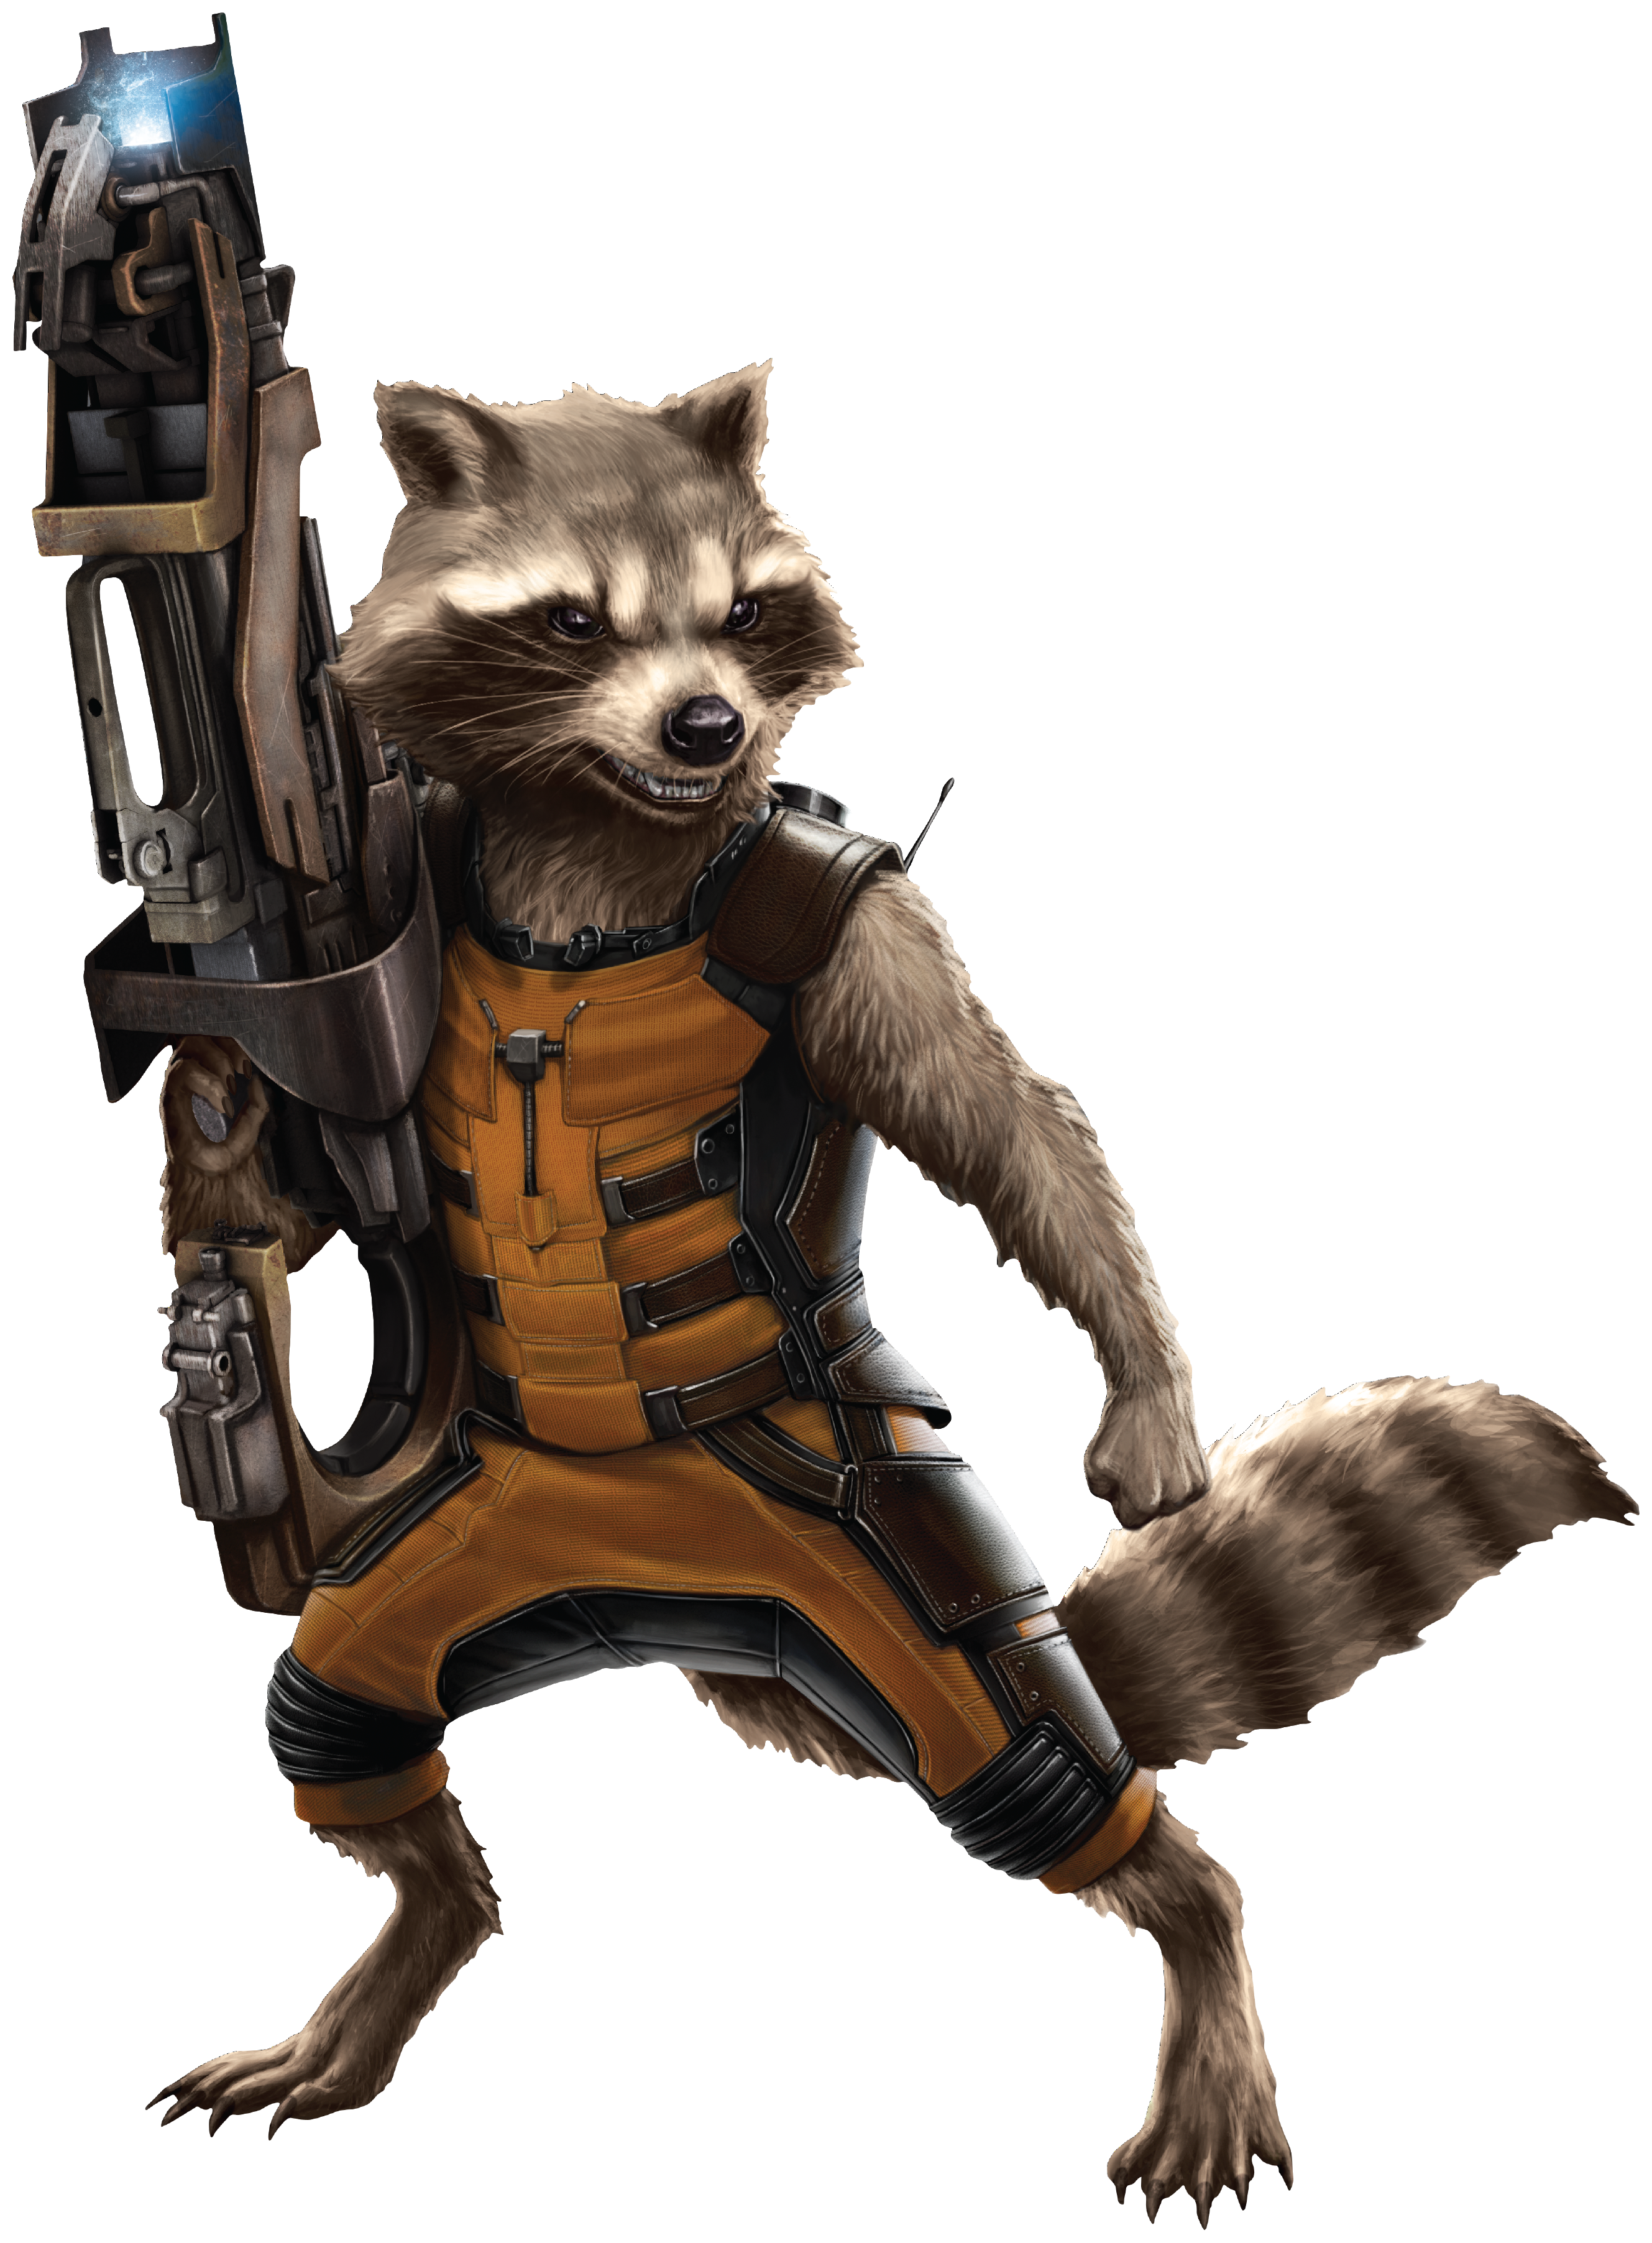 Rocket Raccoon (Marvel Cinematic Universe)